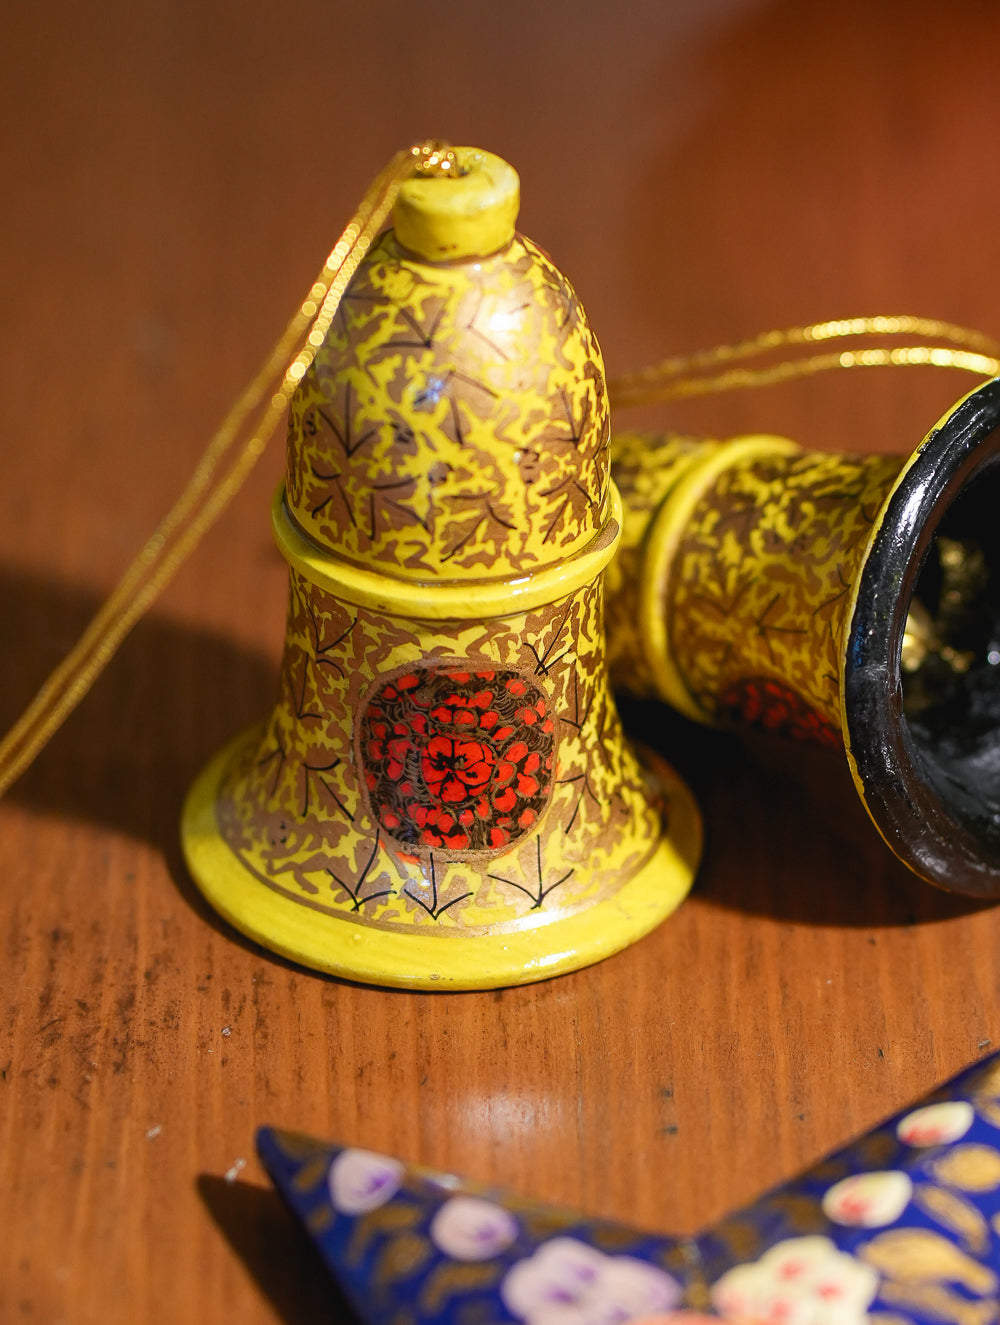 Load image into Gallery viewer, Kashmiri Art Xmas Decorations - Stars &amp; Bells (Set of 4)